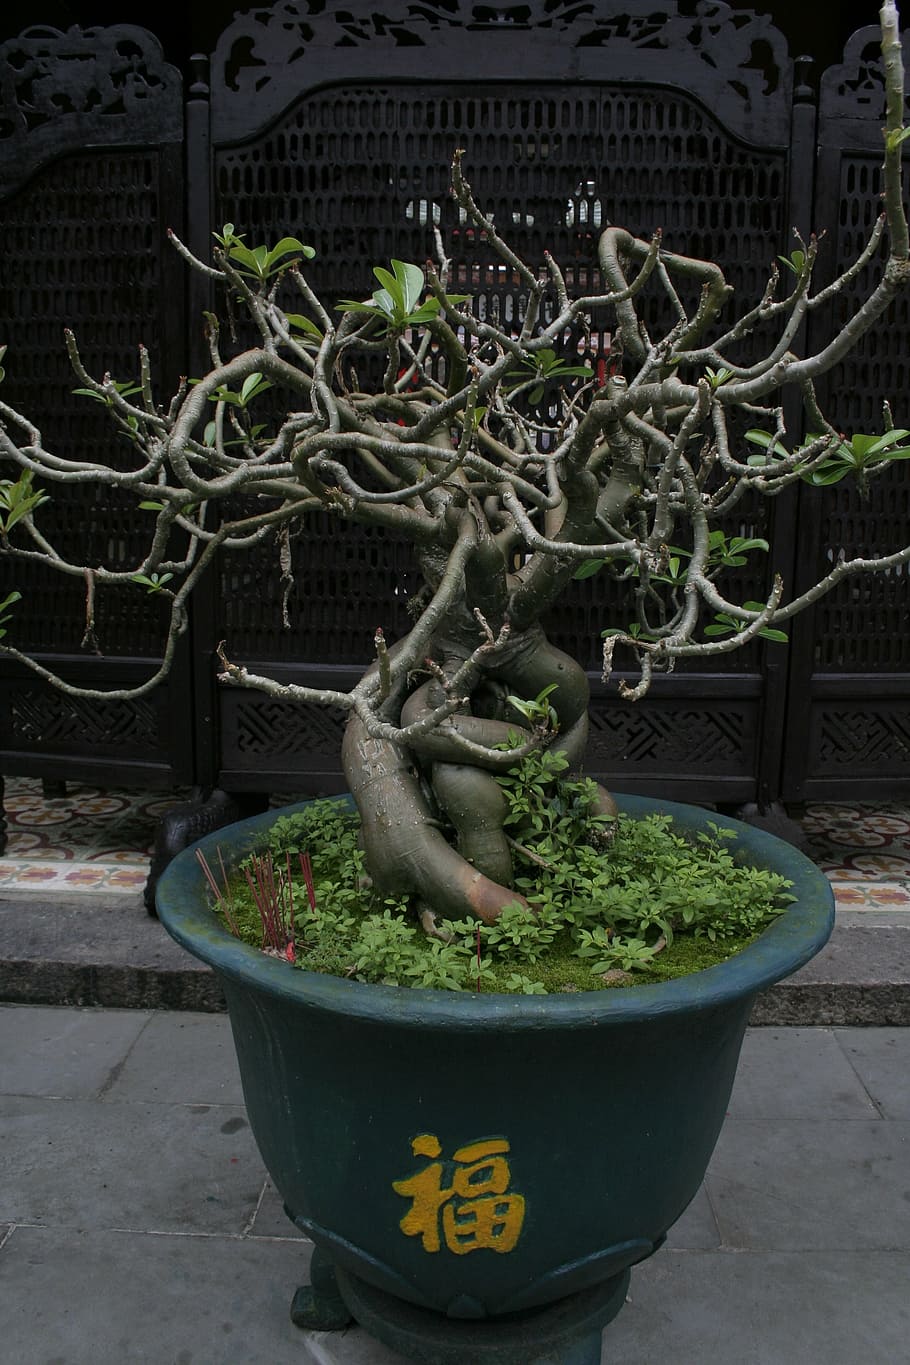 bonsai, vietnamese scripture, temple, potted plant, plant, growth, outdoors, day, nature, bonsai tree